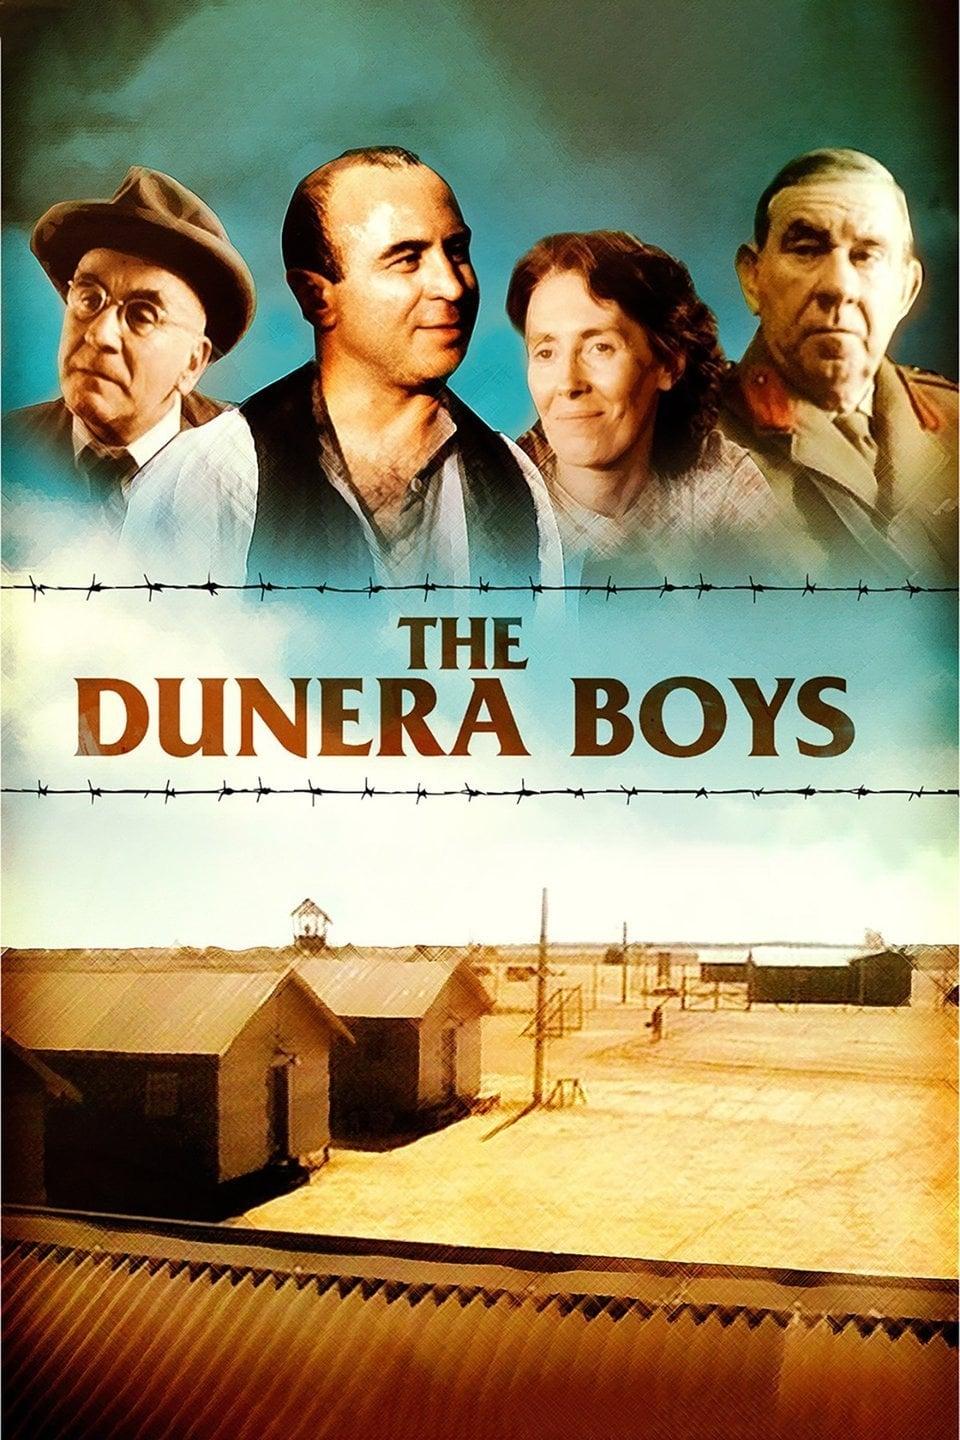 The Dunera Boys poster